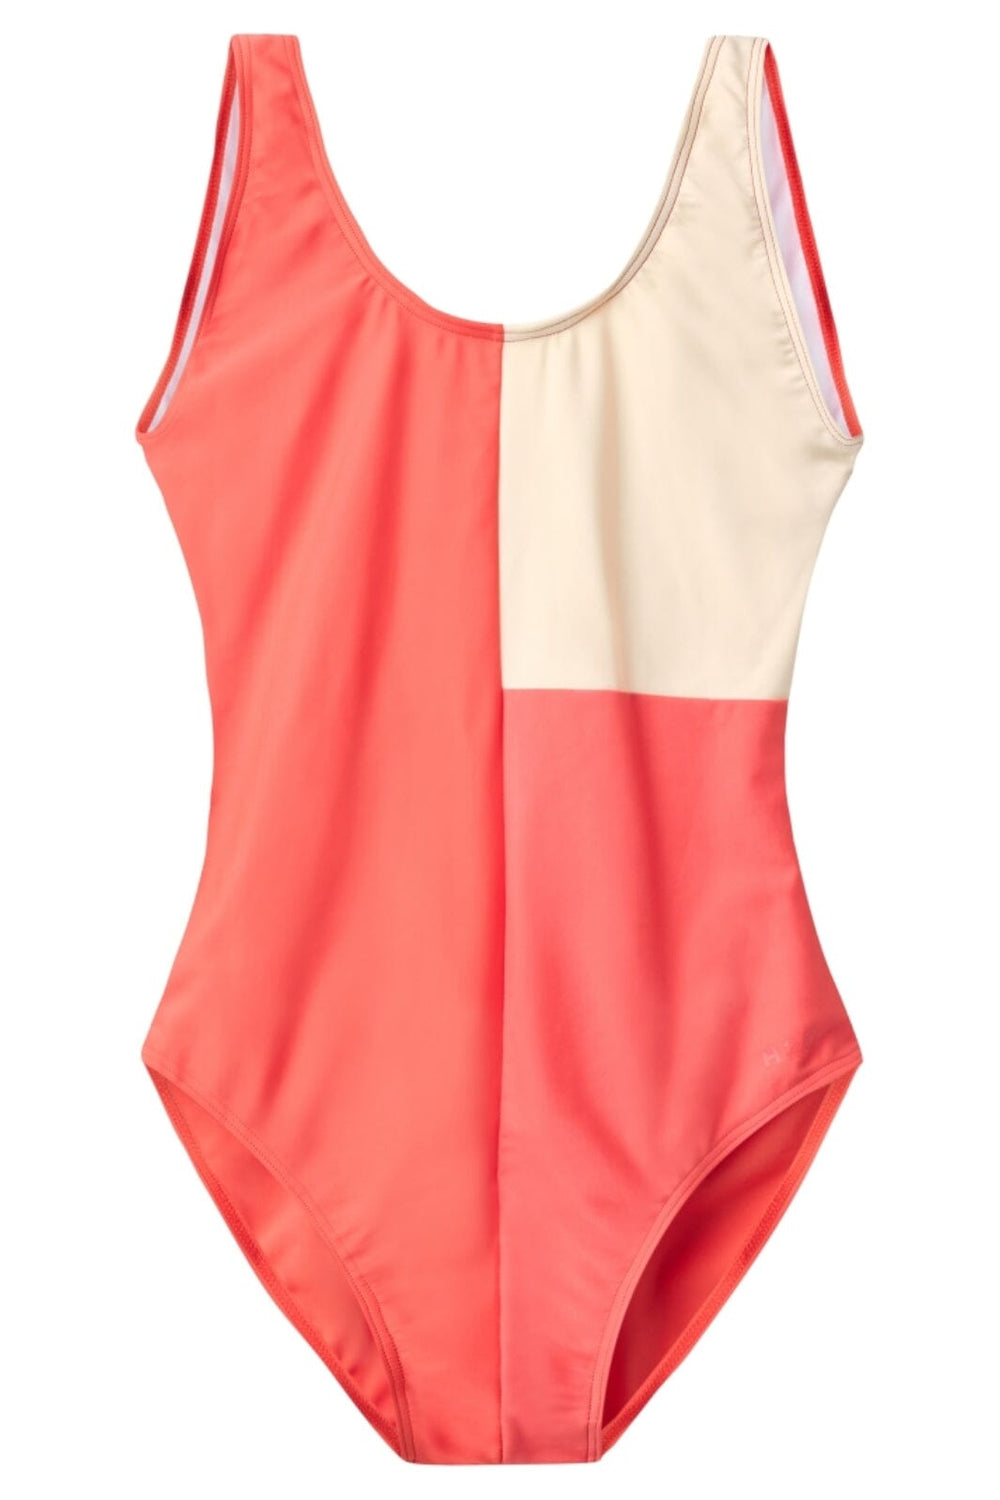 H2O - Møn Colorblock Swim Suit - 7710 Pumpkin/Light Peach Badedragter 